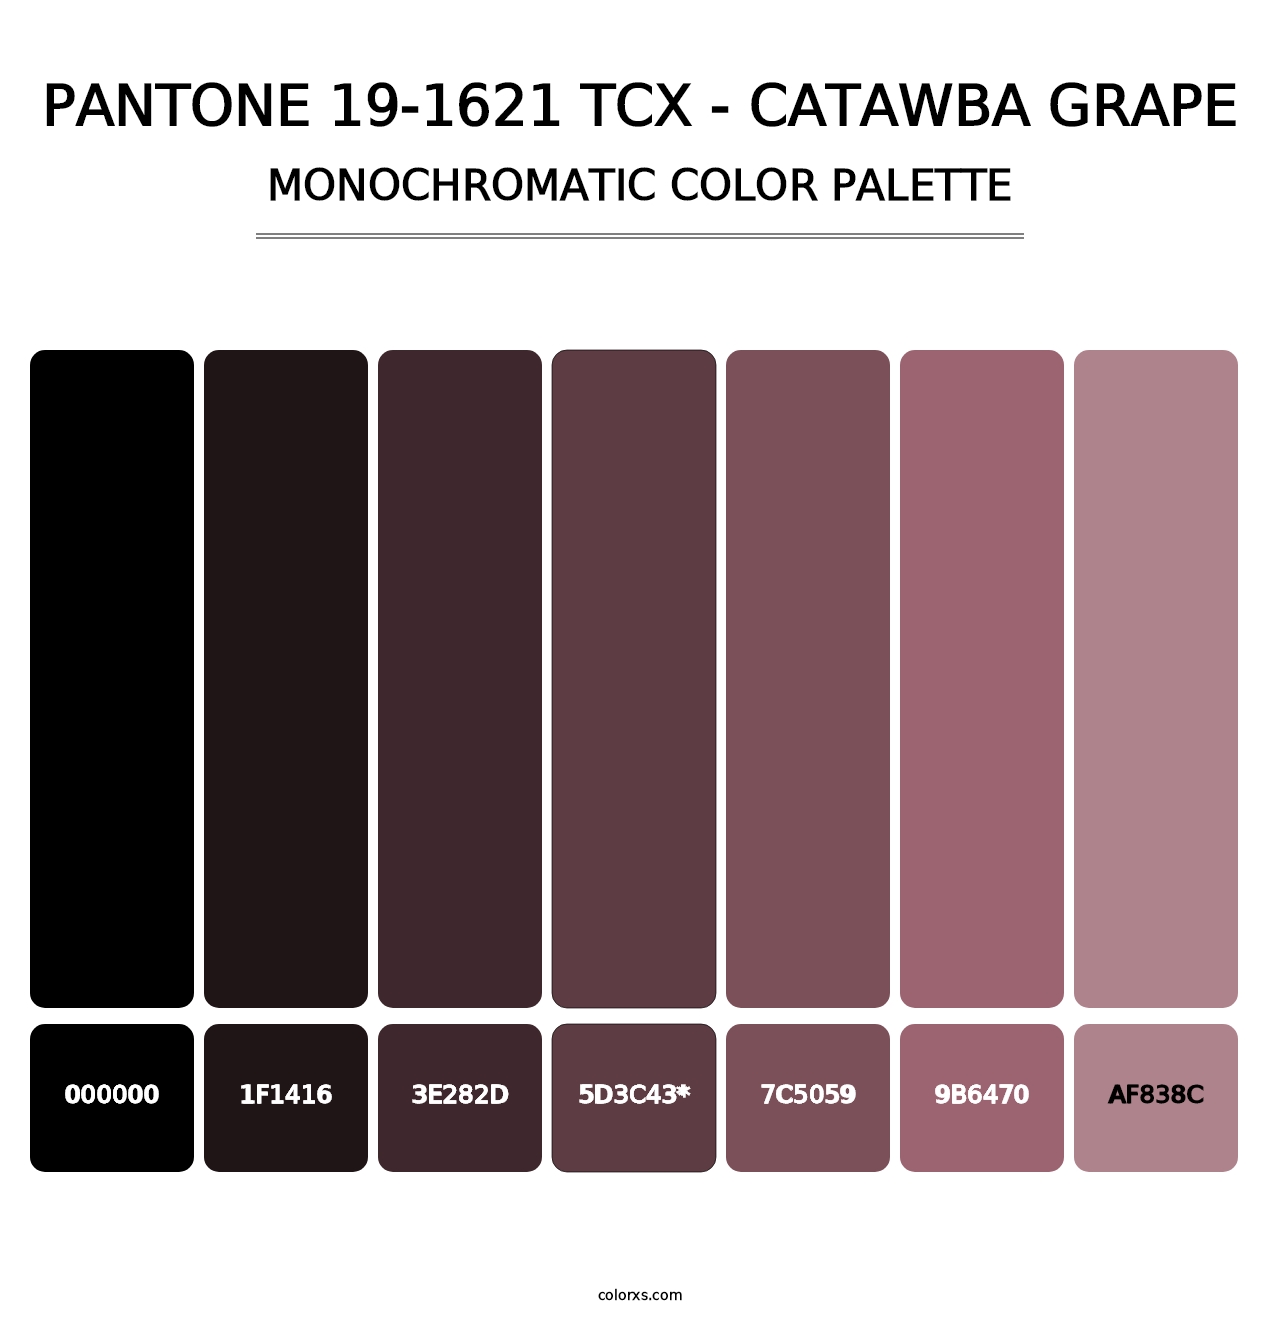 PANTONE 19-1621 TCX - Catawba Grape - Monochromatic Color Palette